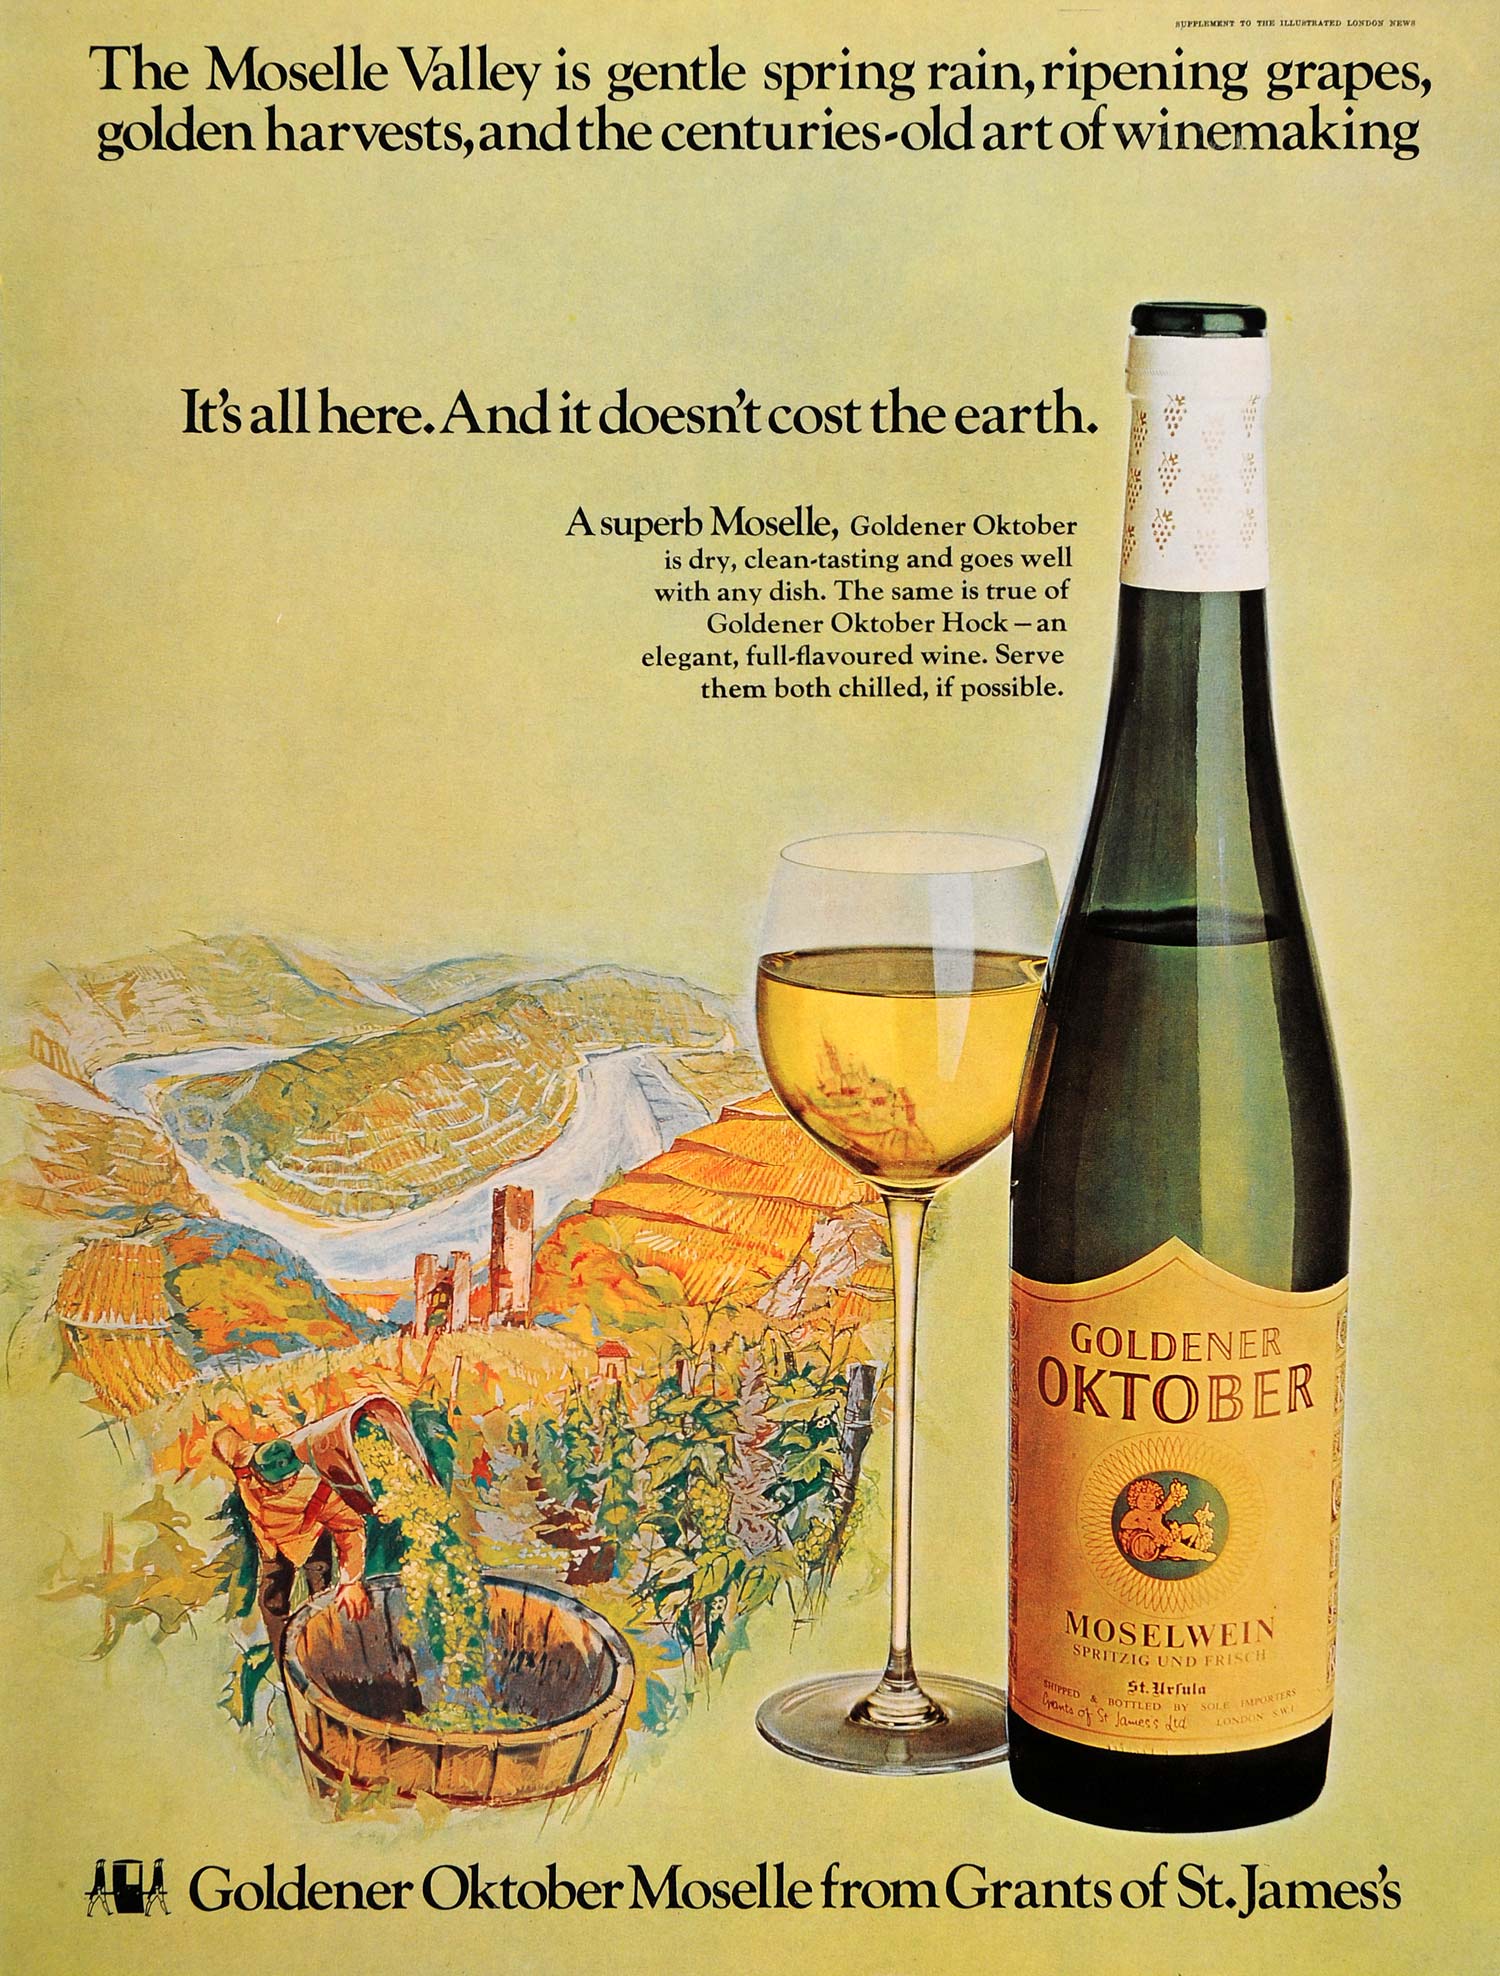 1968 Ad Goldener Oktober Moselle Valley Moselwein Wine - ORIGINAL LN1